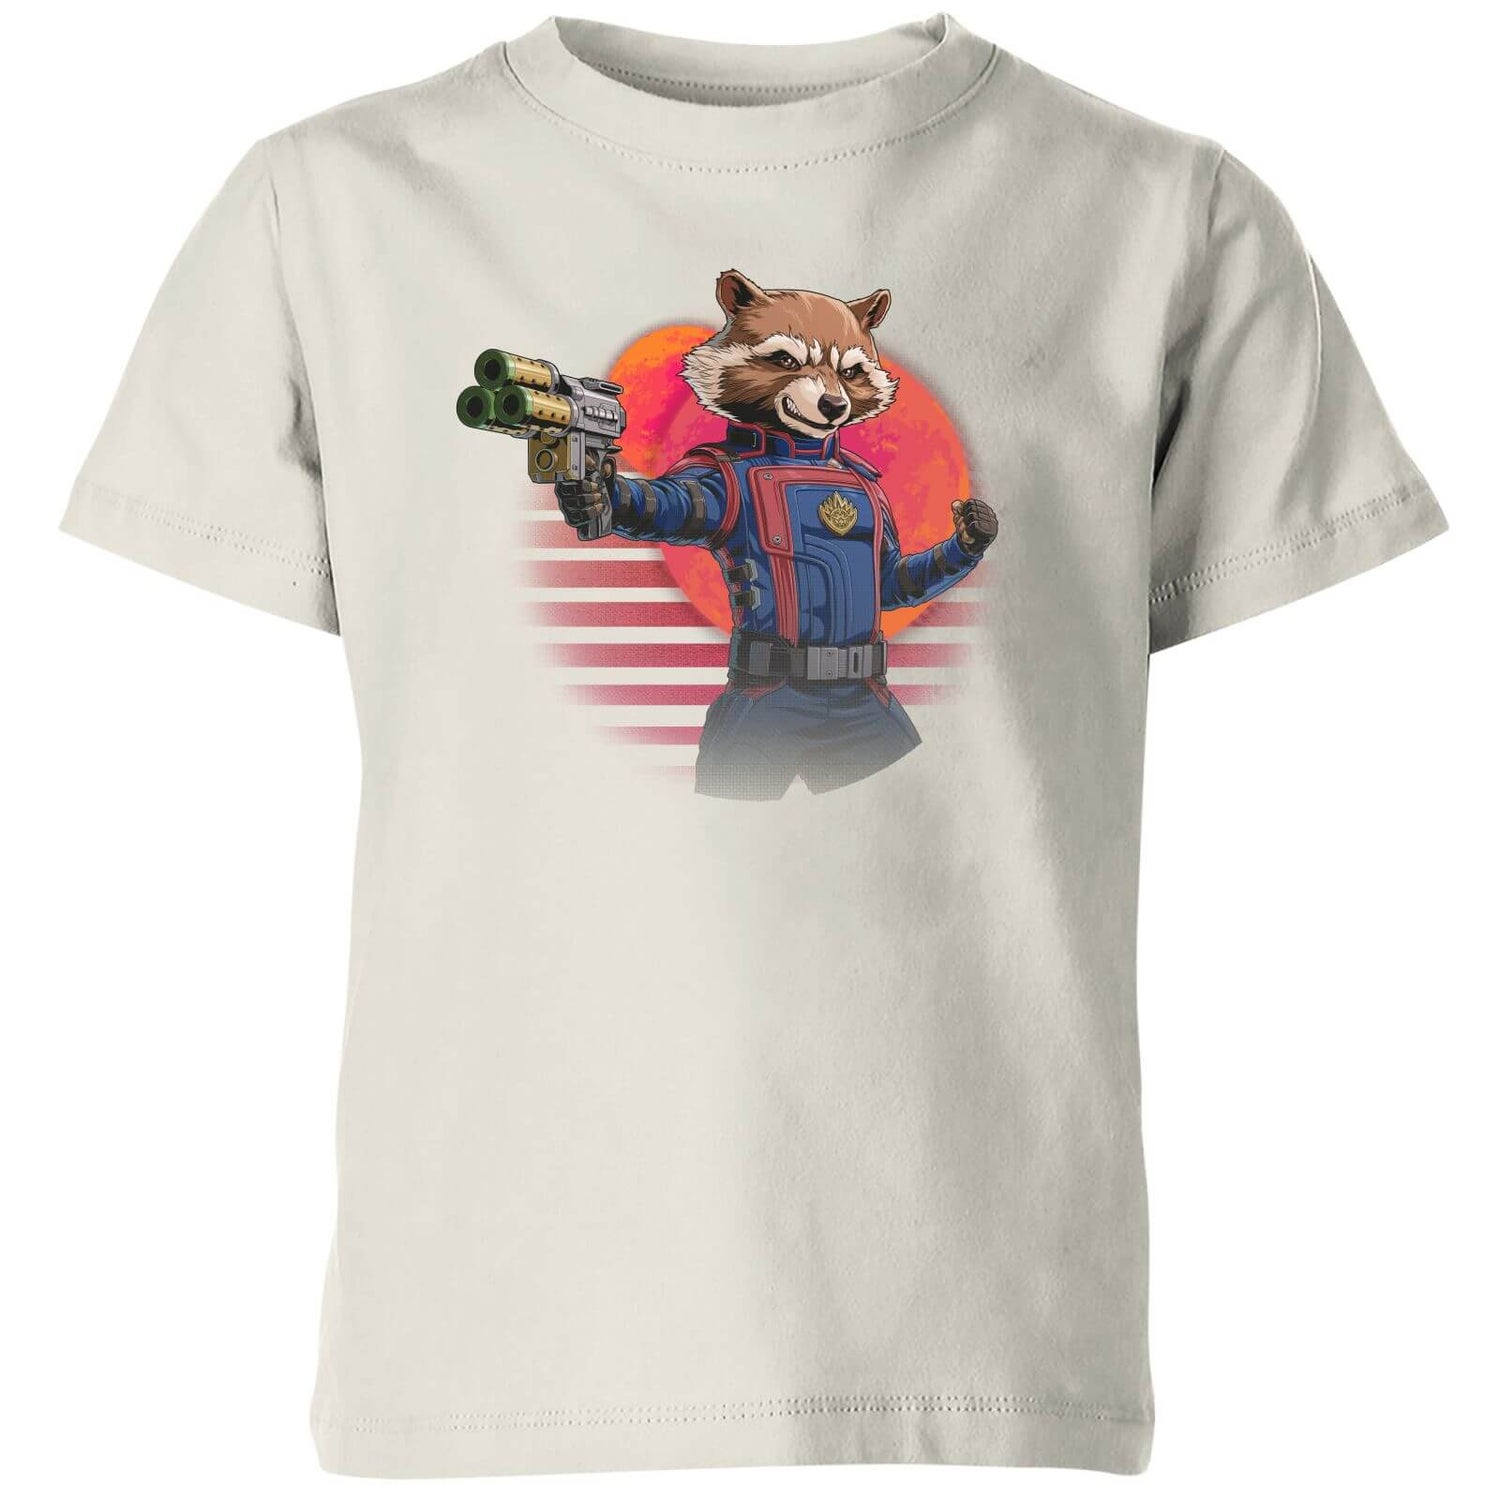 Guardians of the Galaxy Retro Rocket Raccoon Kids' T-Shirt - Cream